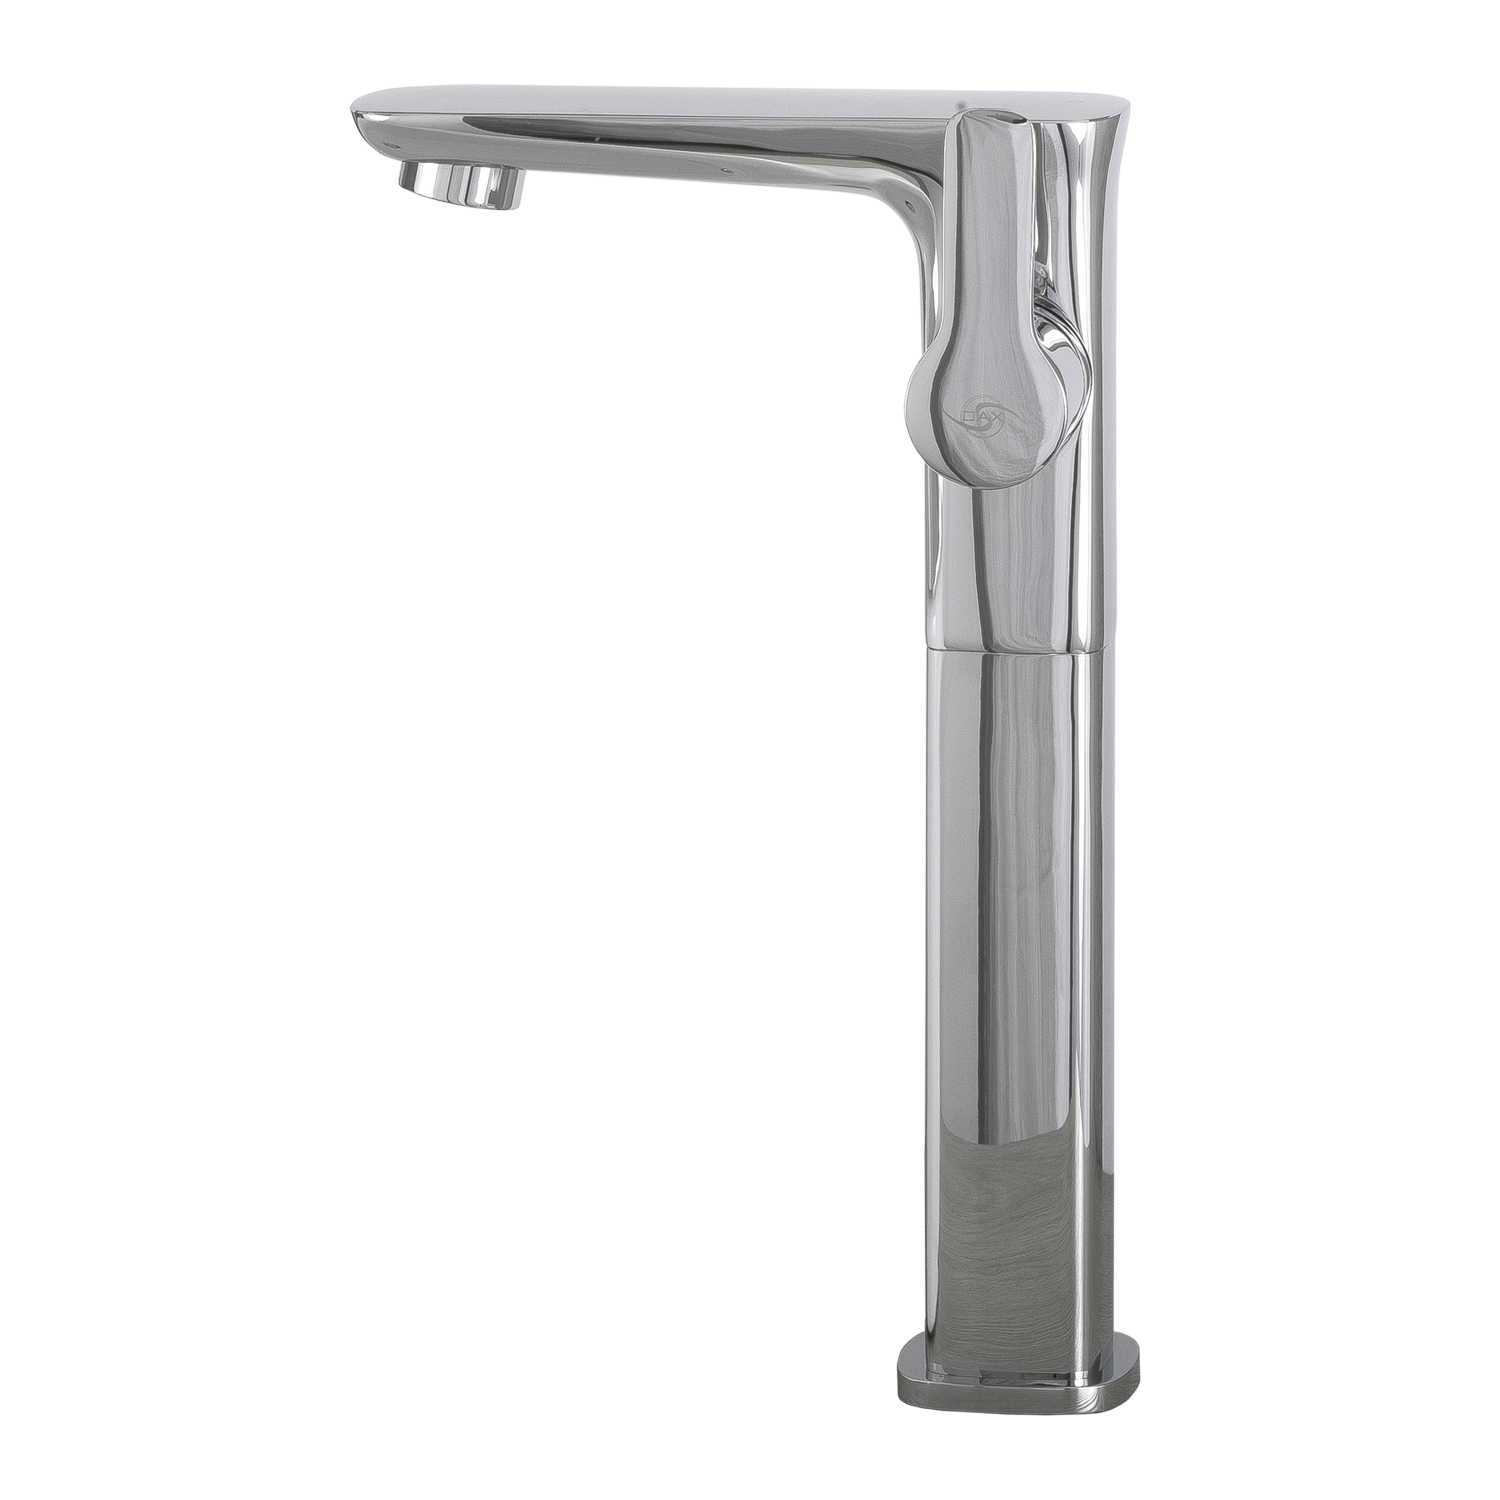 DAX Single Handle Vessel Sink Bathroom Faucet, Brass Body, Chrome Finish, 4-3/4 x 10-1/4 Inches (DAX-9883B)